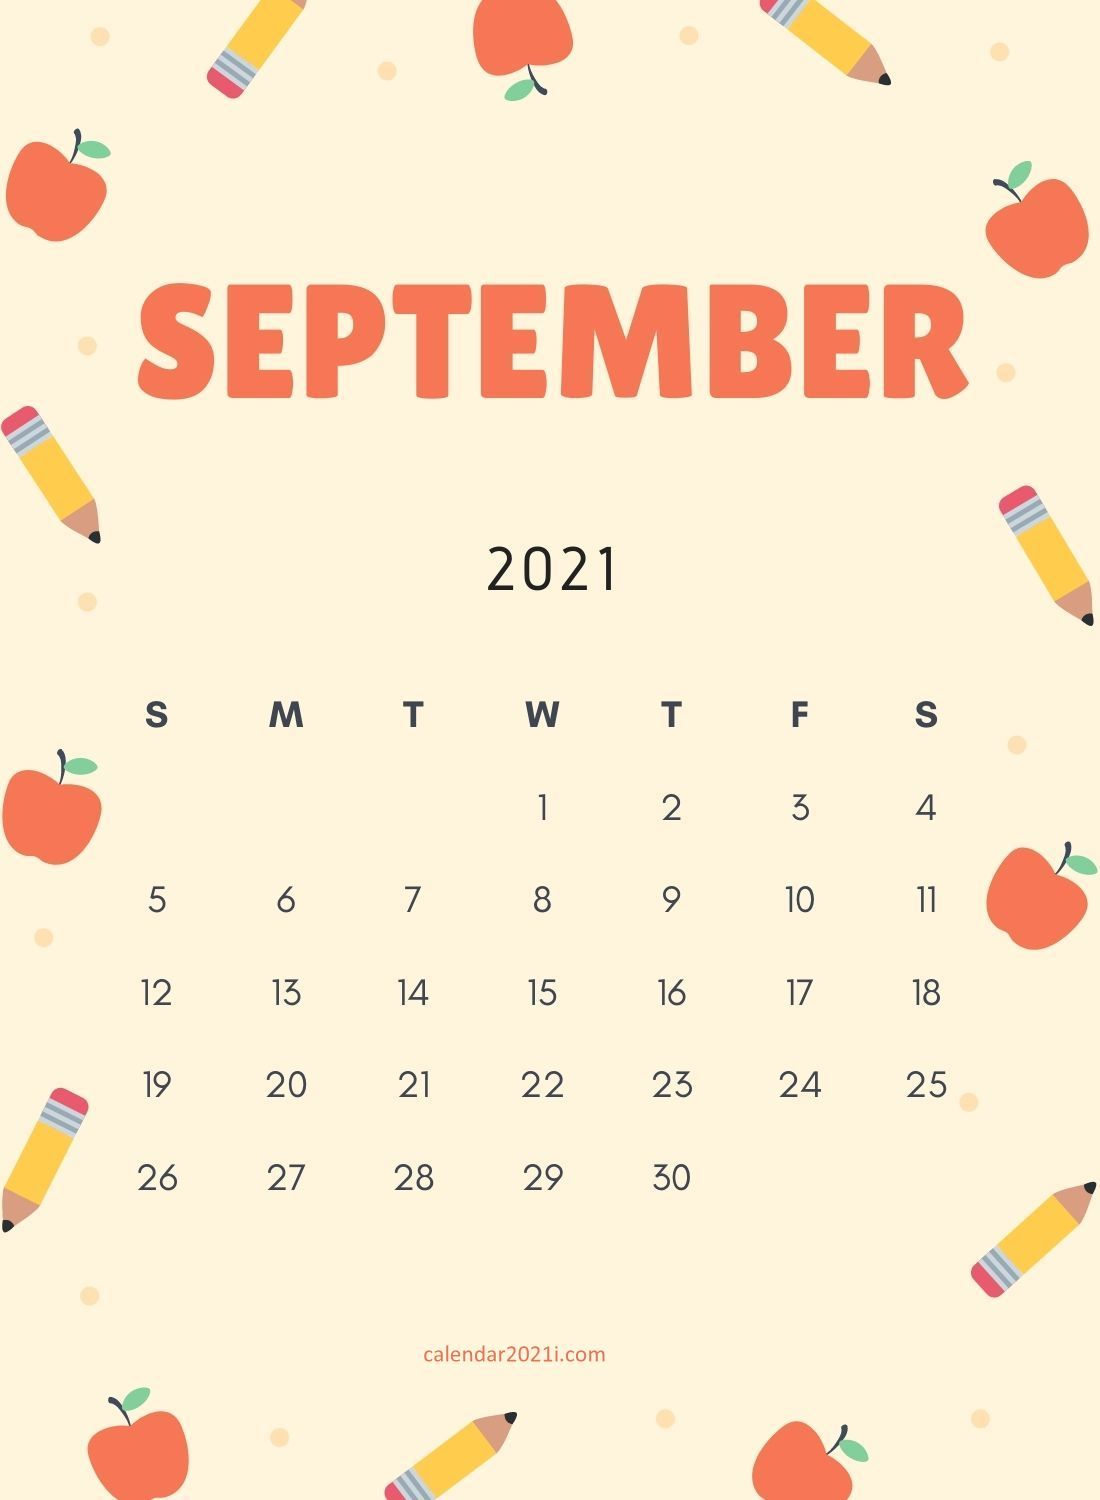 September 2021 wall calendar printable free download. Monthly calendar printable, Calendar printables, Printable calendar